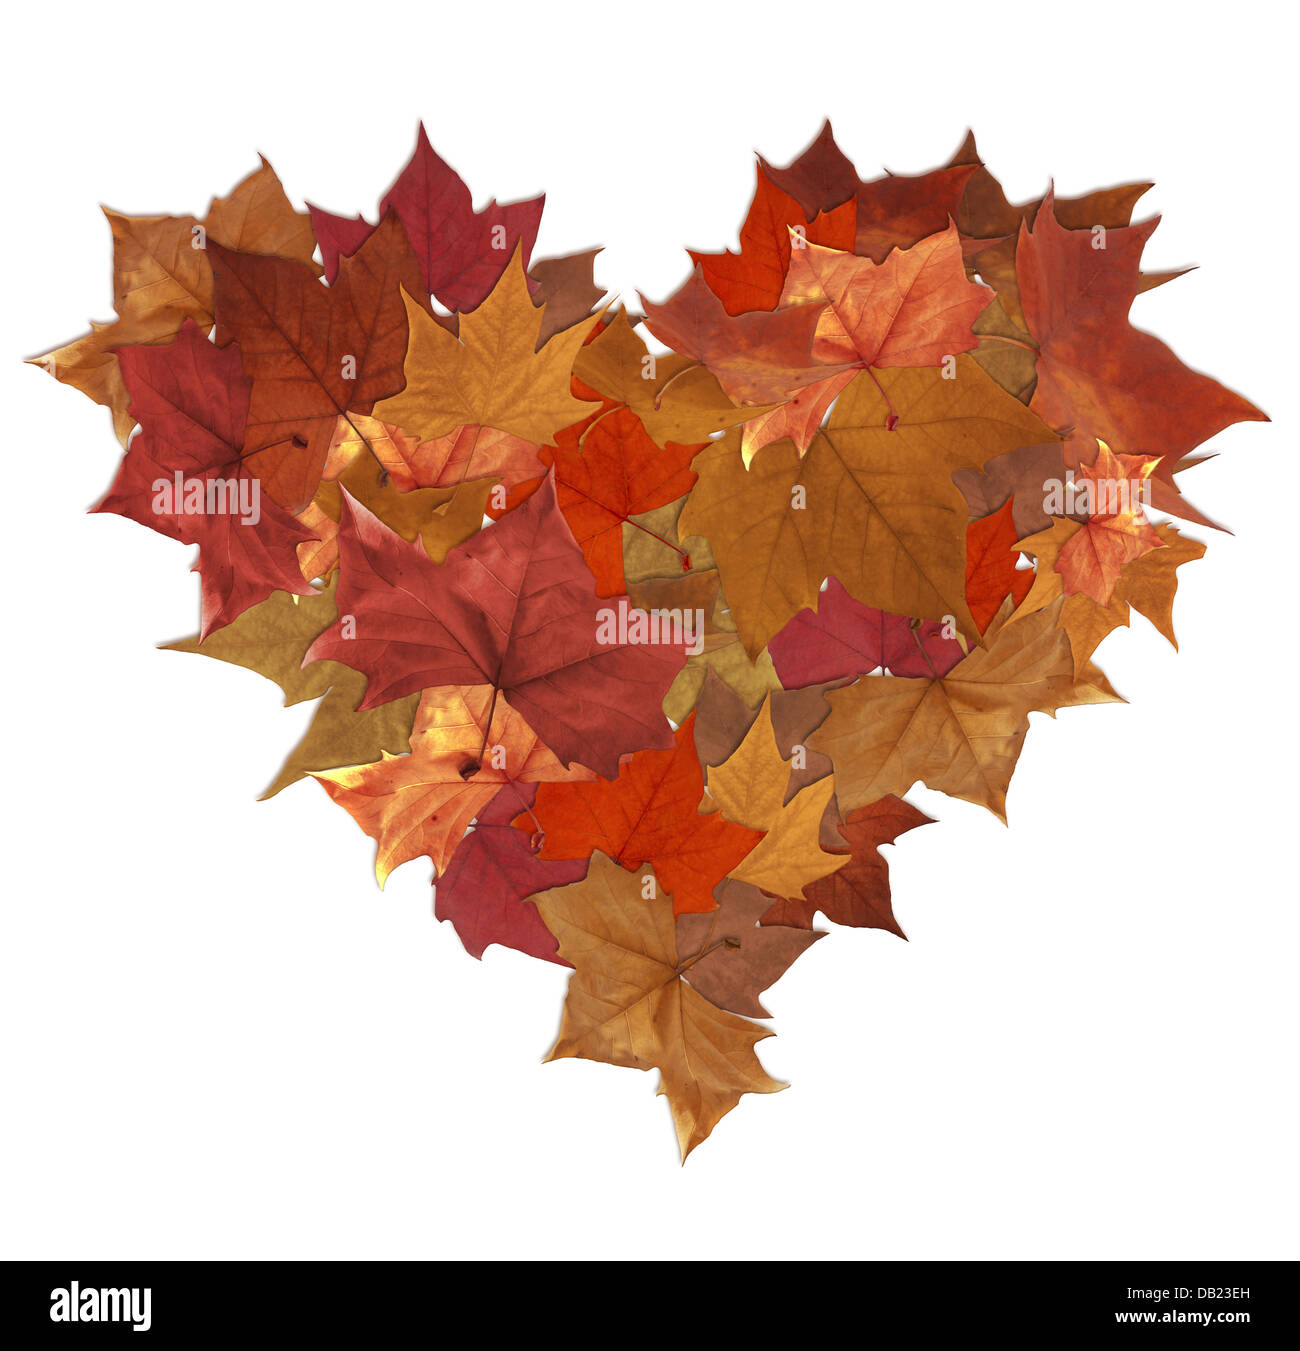 Autumn leaves heart shape Stock Photo